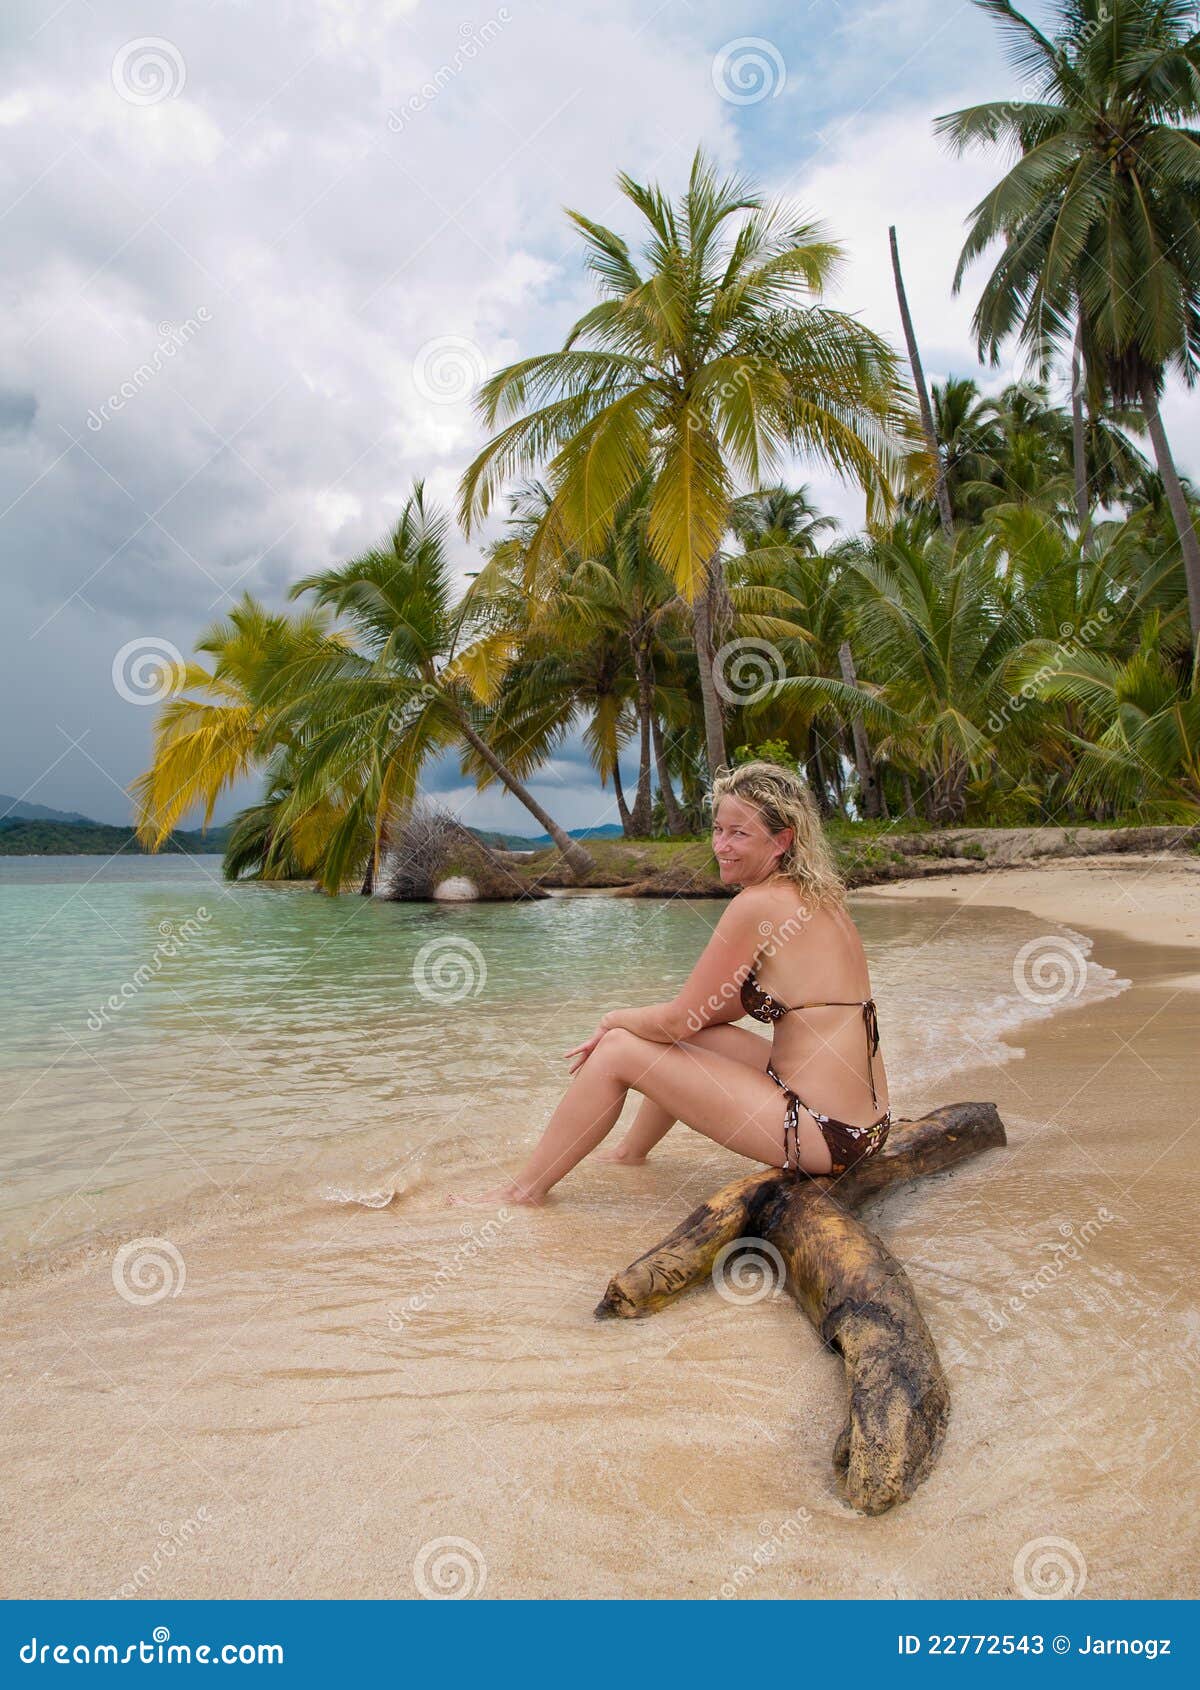 beatiful young lady in a caribean beach